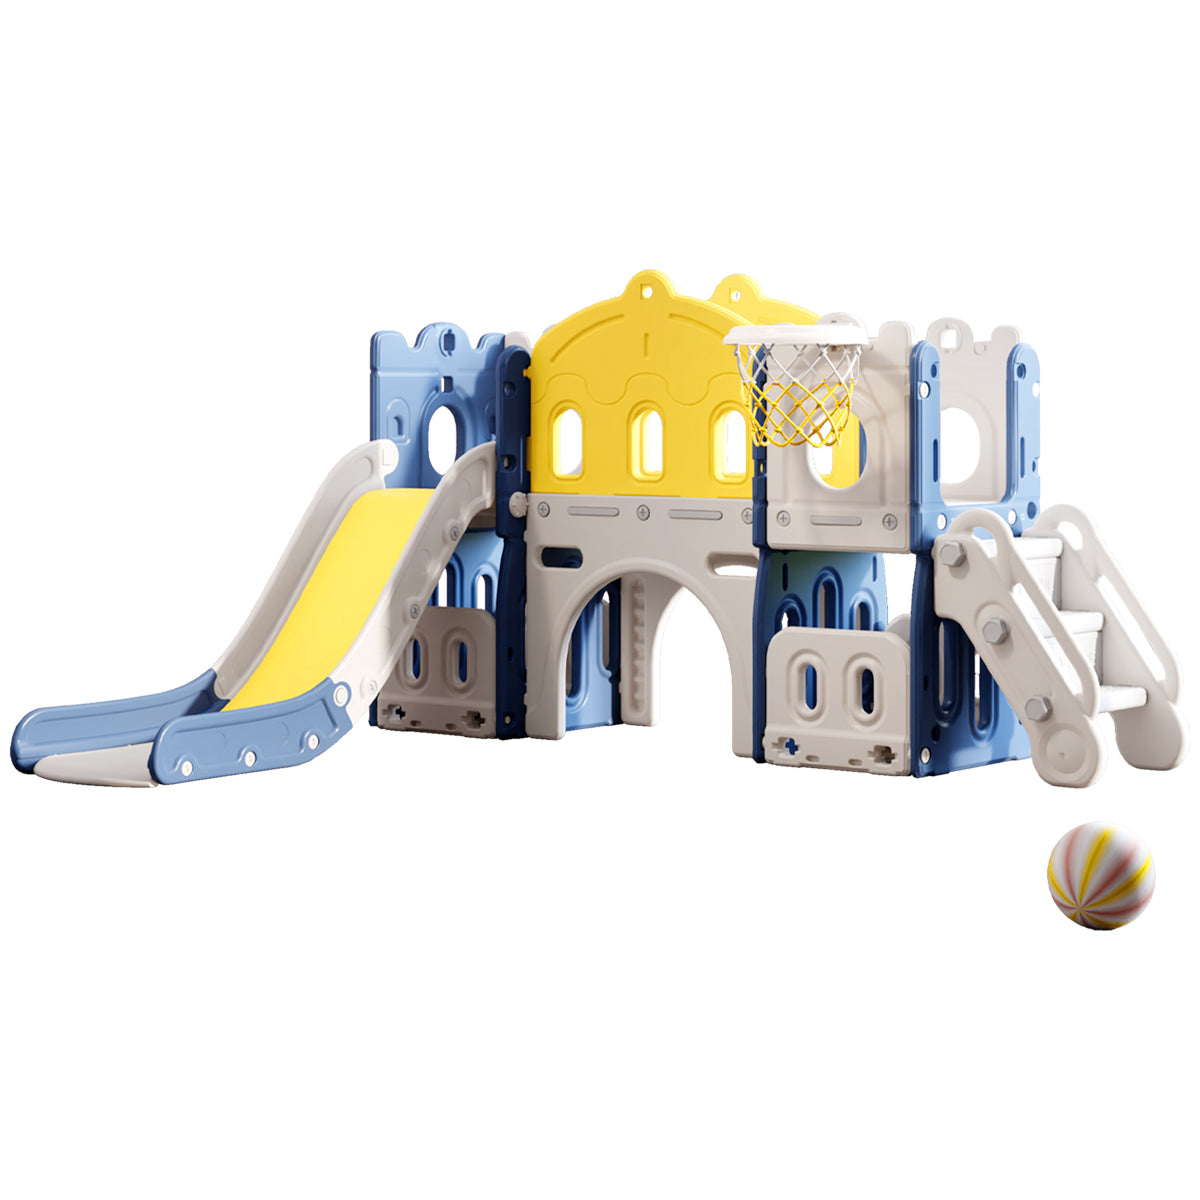 190 cm W Toddler Slide City Wall Kids Activity Playset